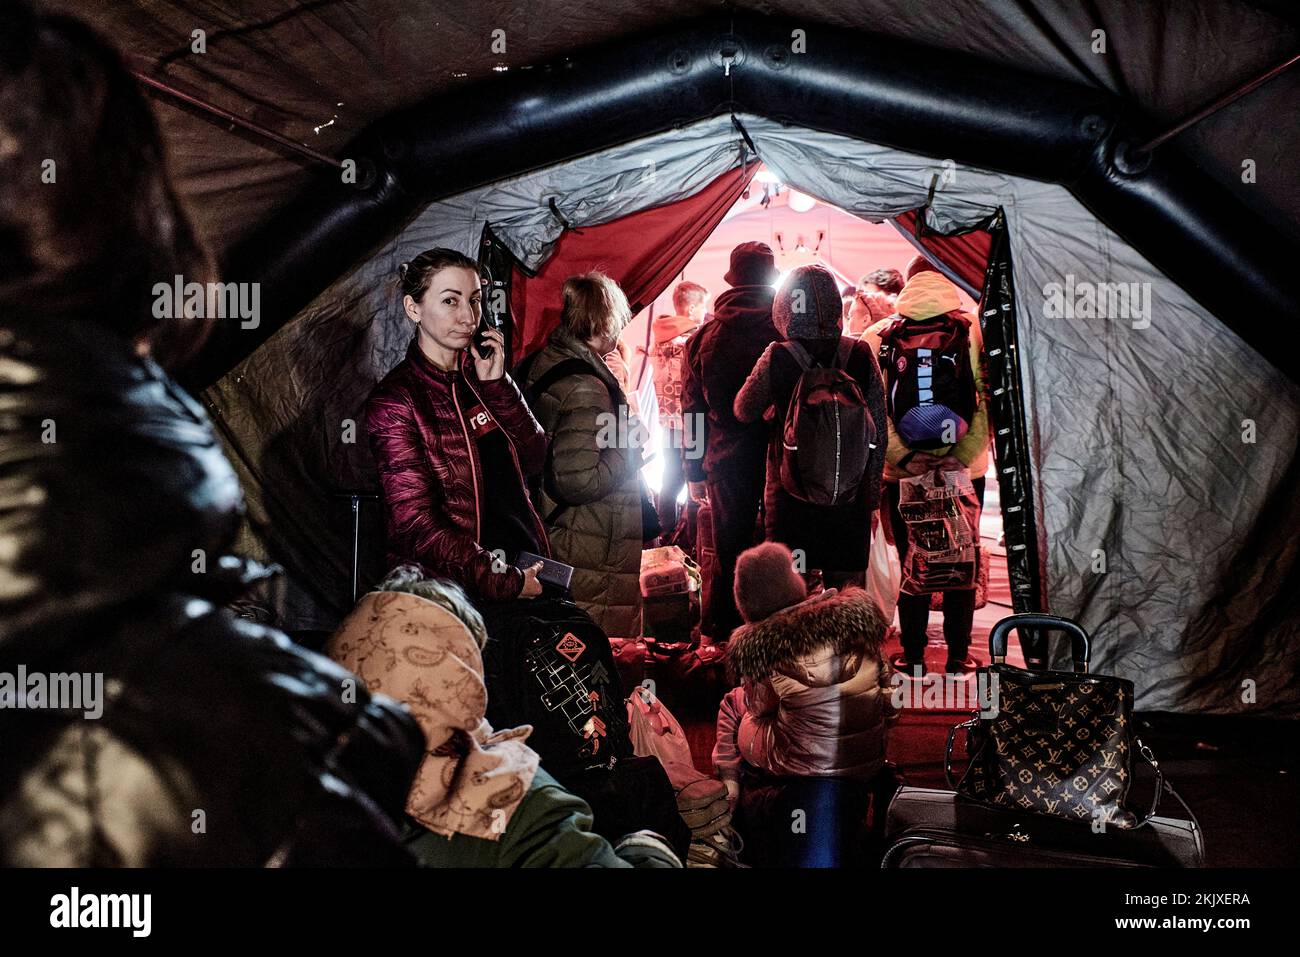 Antonin Burat / Le Pictorium -  War in Ukraine: David stands up to Goliath -  30/3/2022  -  Poland / Korczowa  -  Ukrainian refugees waiting to pass t Stock Photo